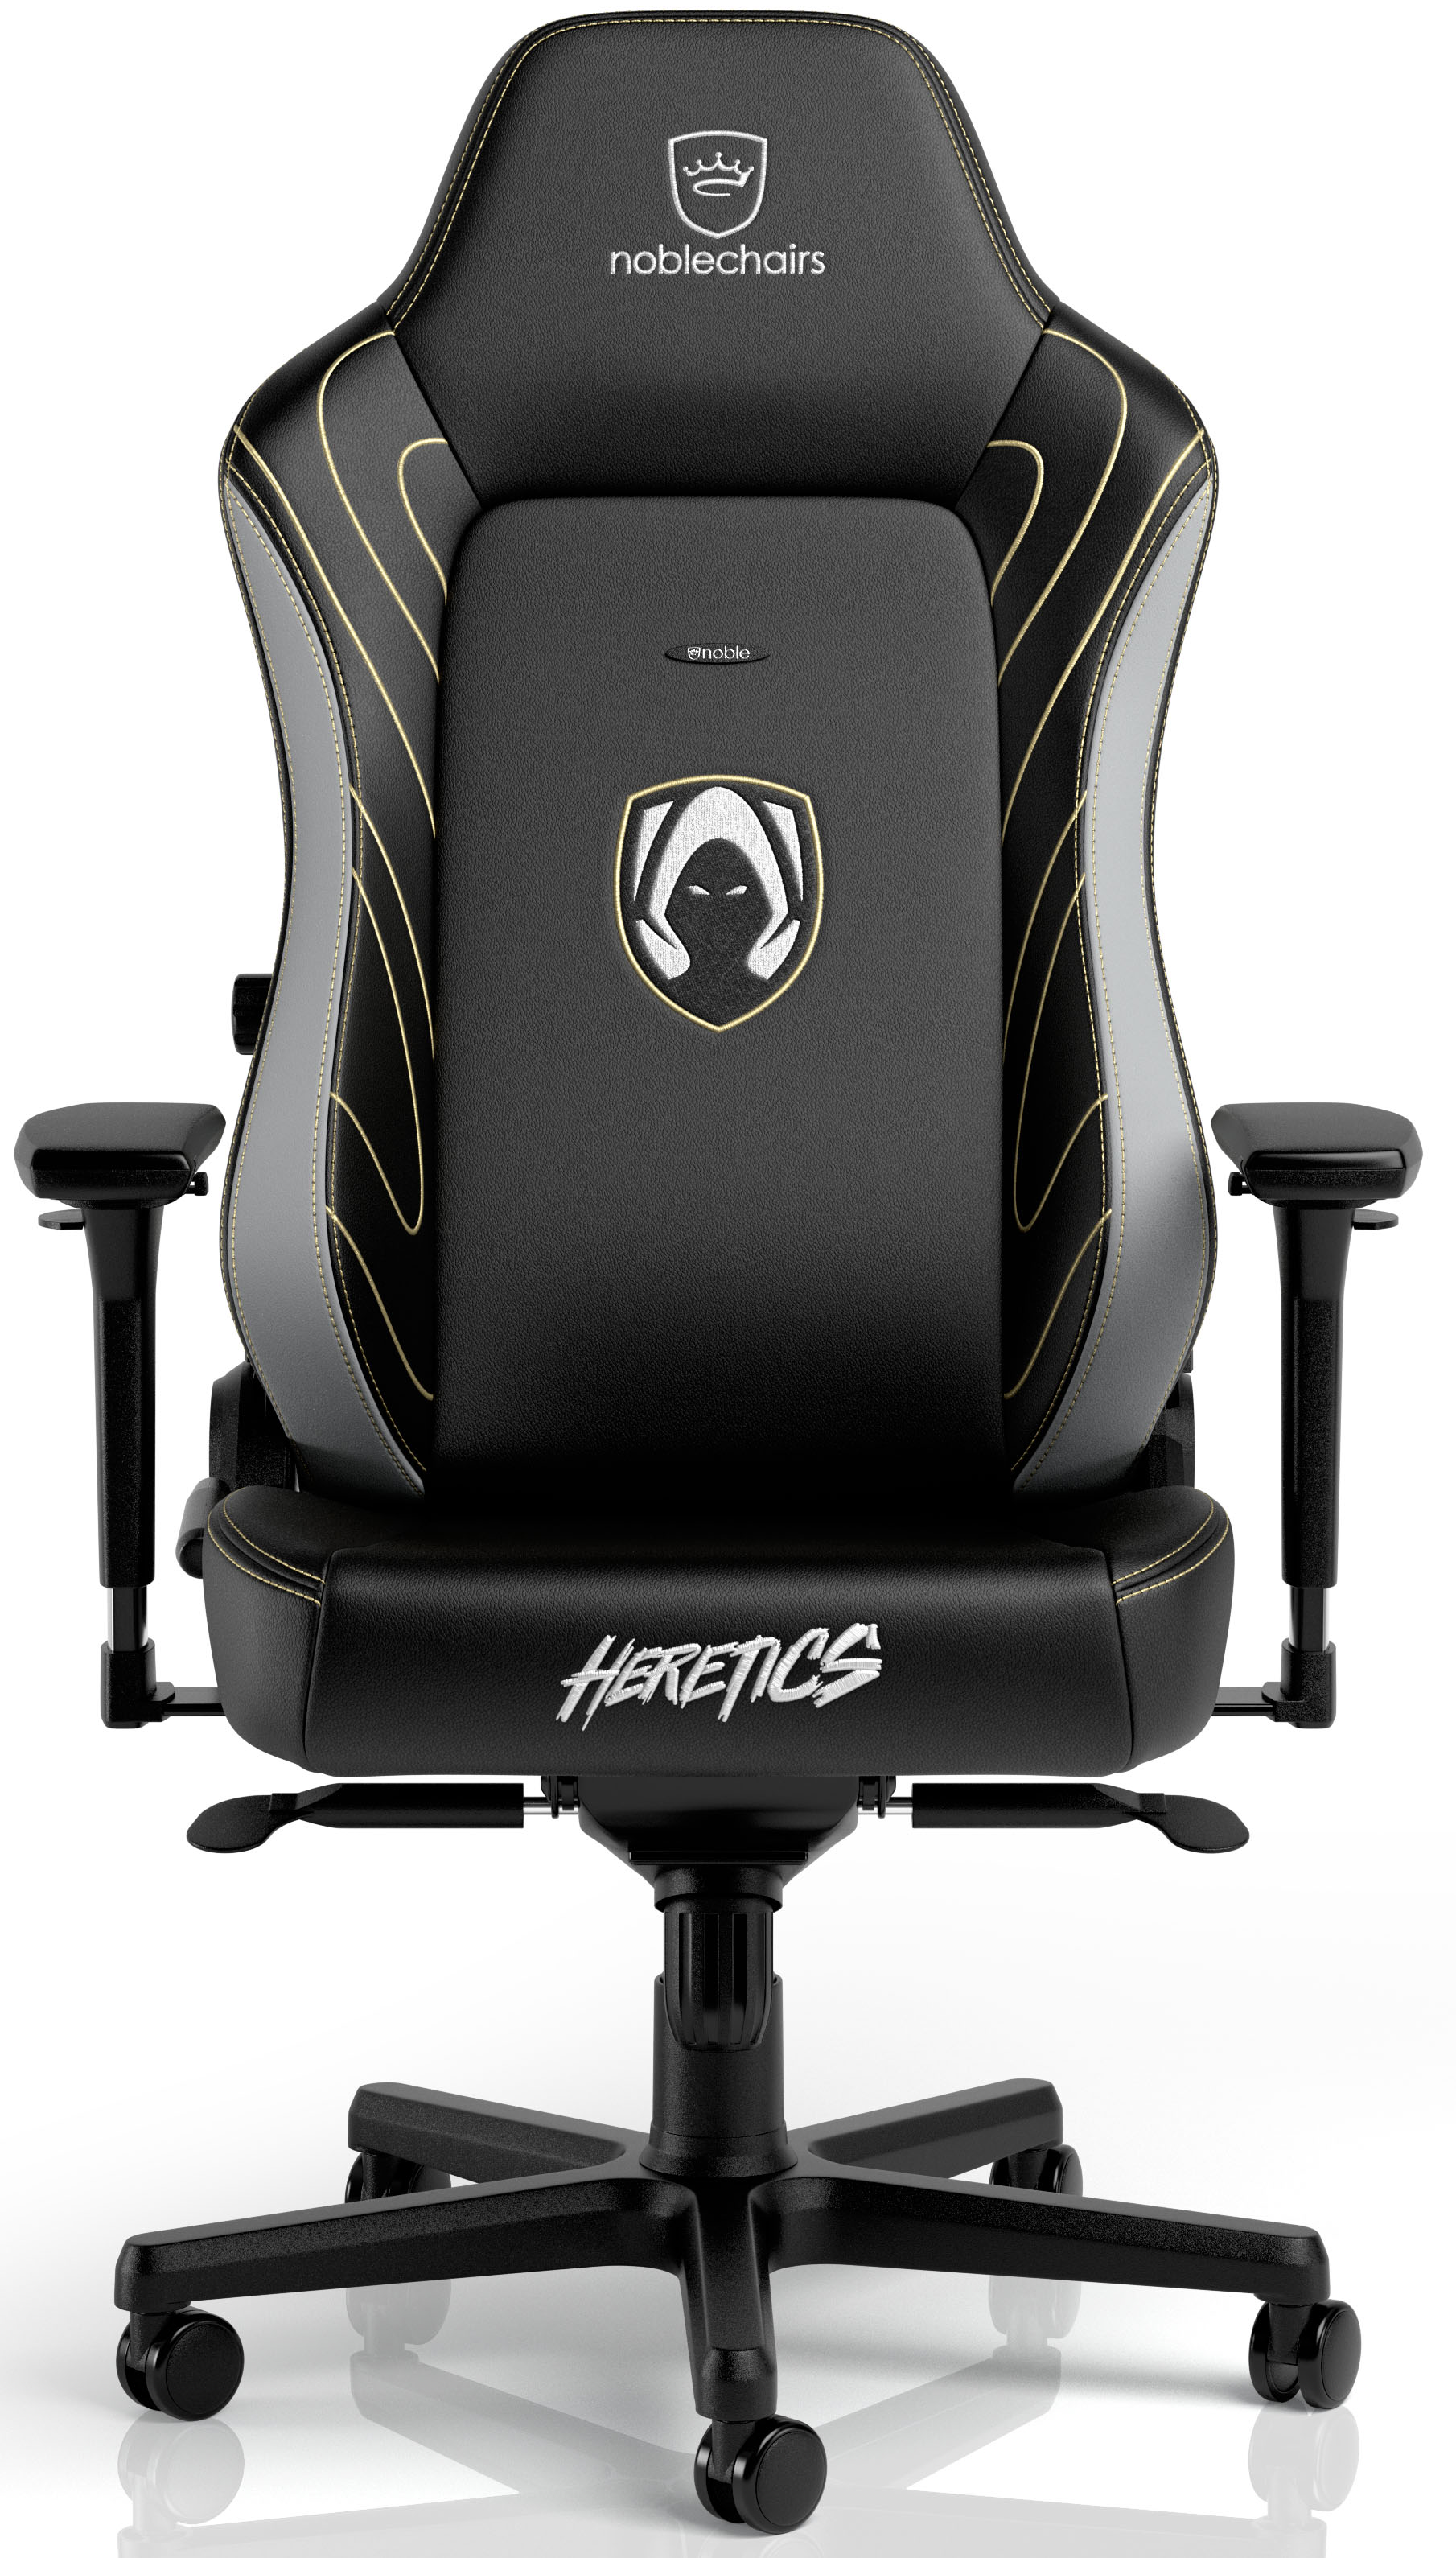 noblechairs - Cadeira noblechairs HERO - Team Heretics Edition